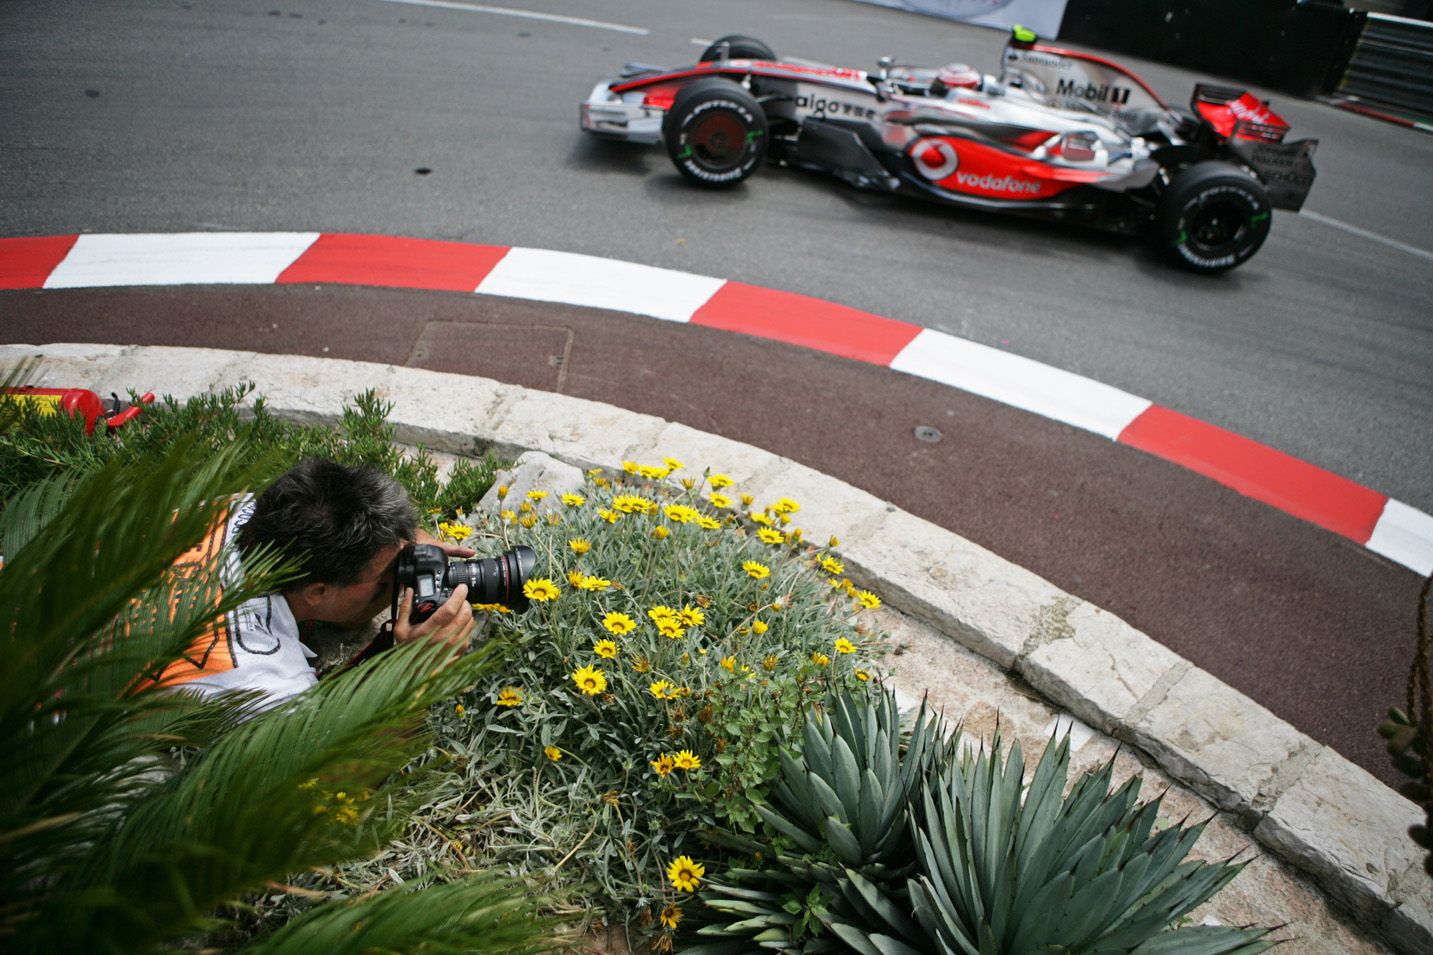 Formula one photographic legend, Rainer Schlegelmilch shooting at the Monaco Grand Prix